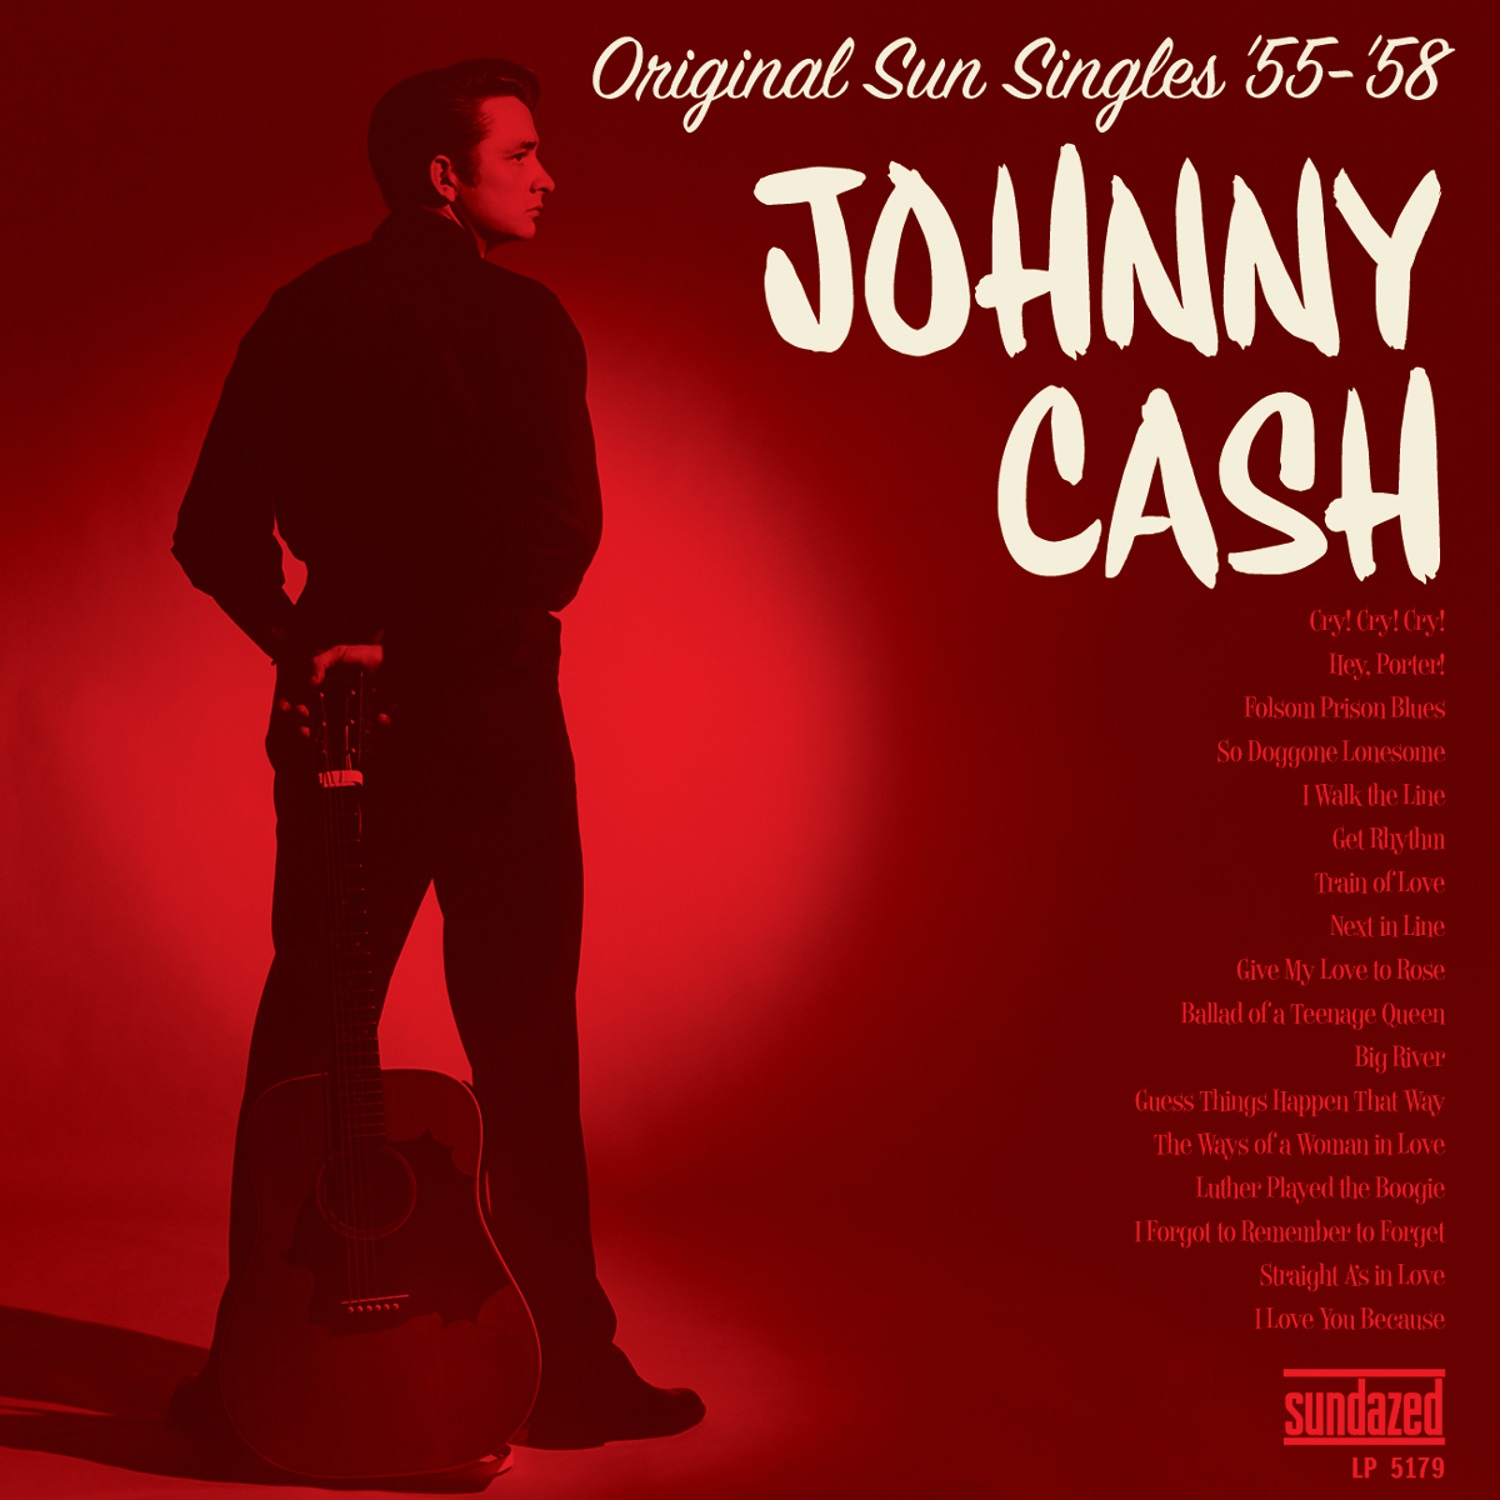 Cash, Johnny - Original Sun Singles 55-58 CD - $5 New Old Stock 